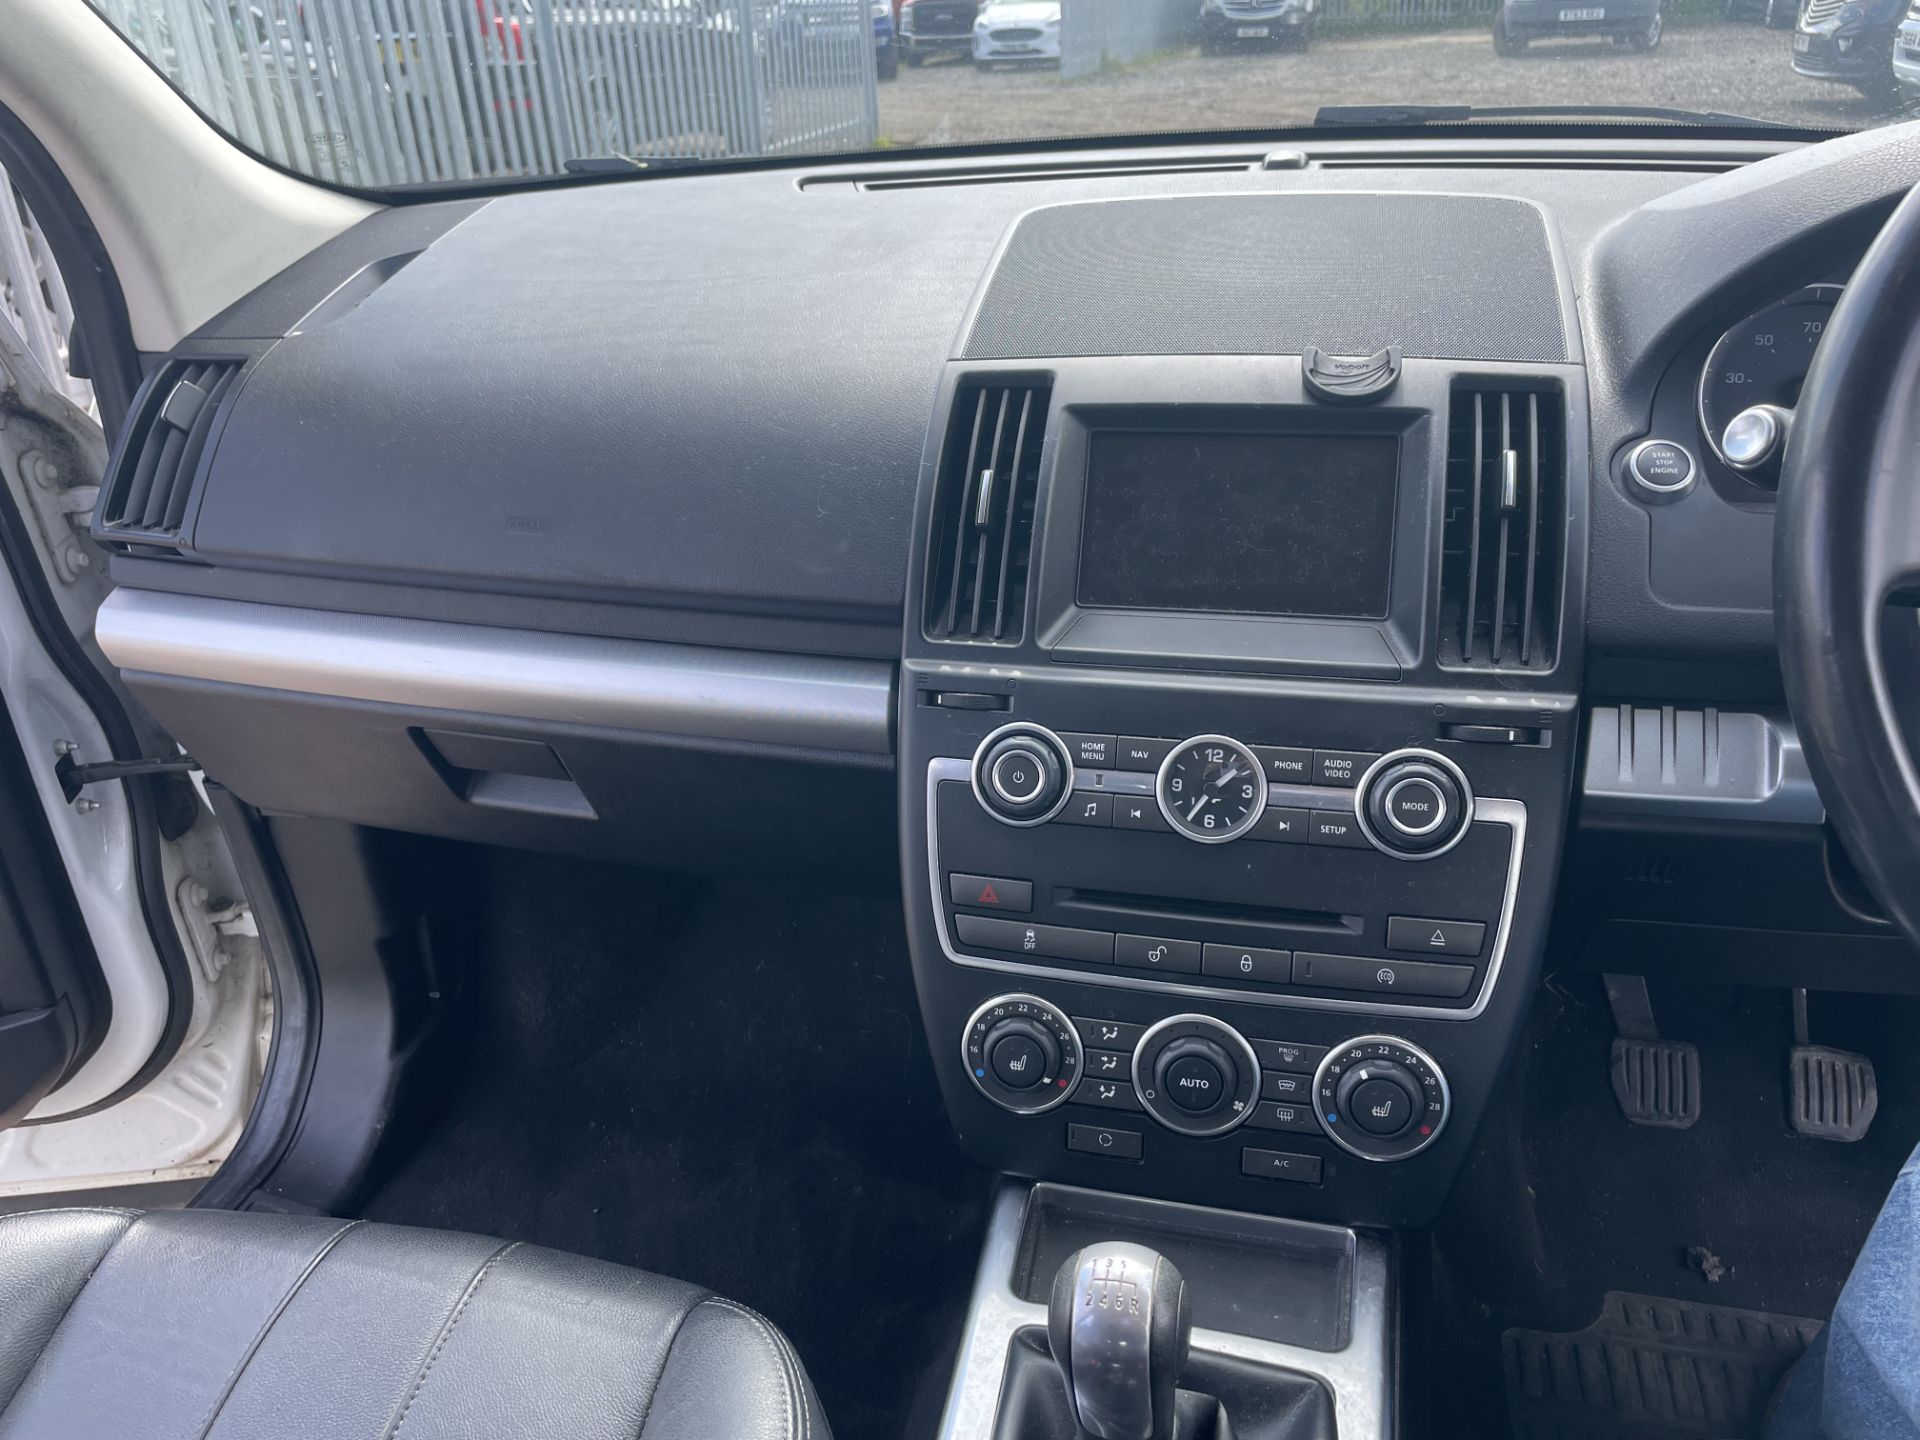 ** ON SALE ** Land Rover Freelander 2 ED4150 XS 2.2 2013 '62 Reg'- Parking Sensors- Alloy Wheels - Image 18 of 35